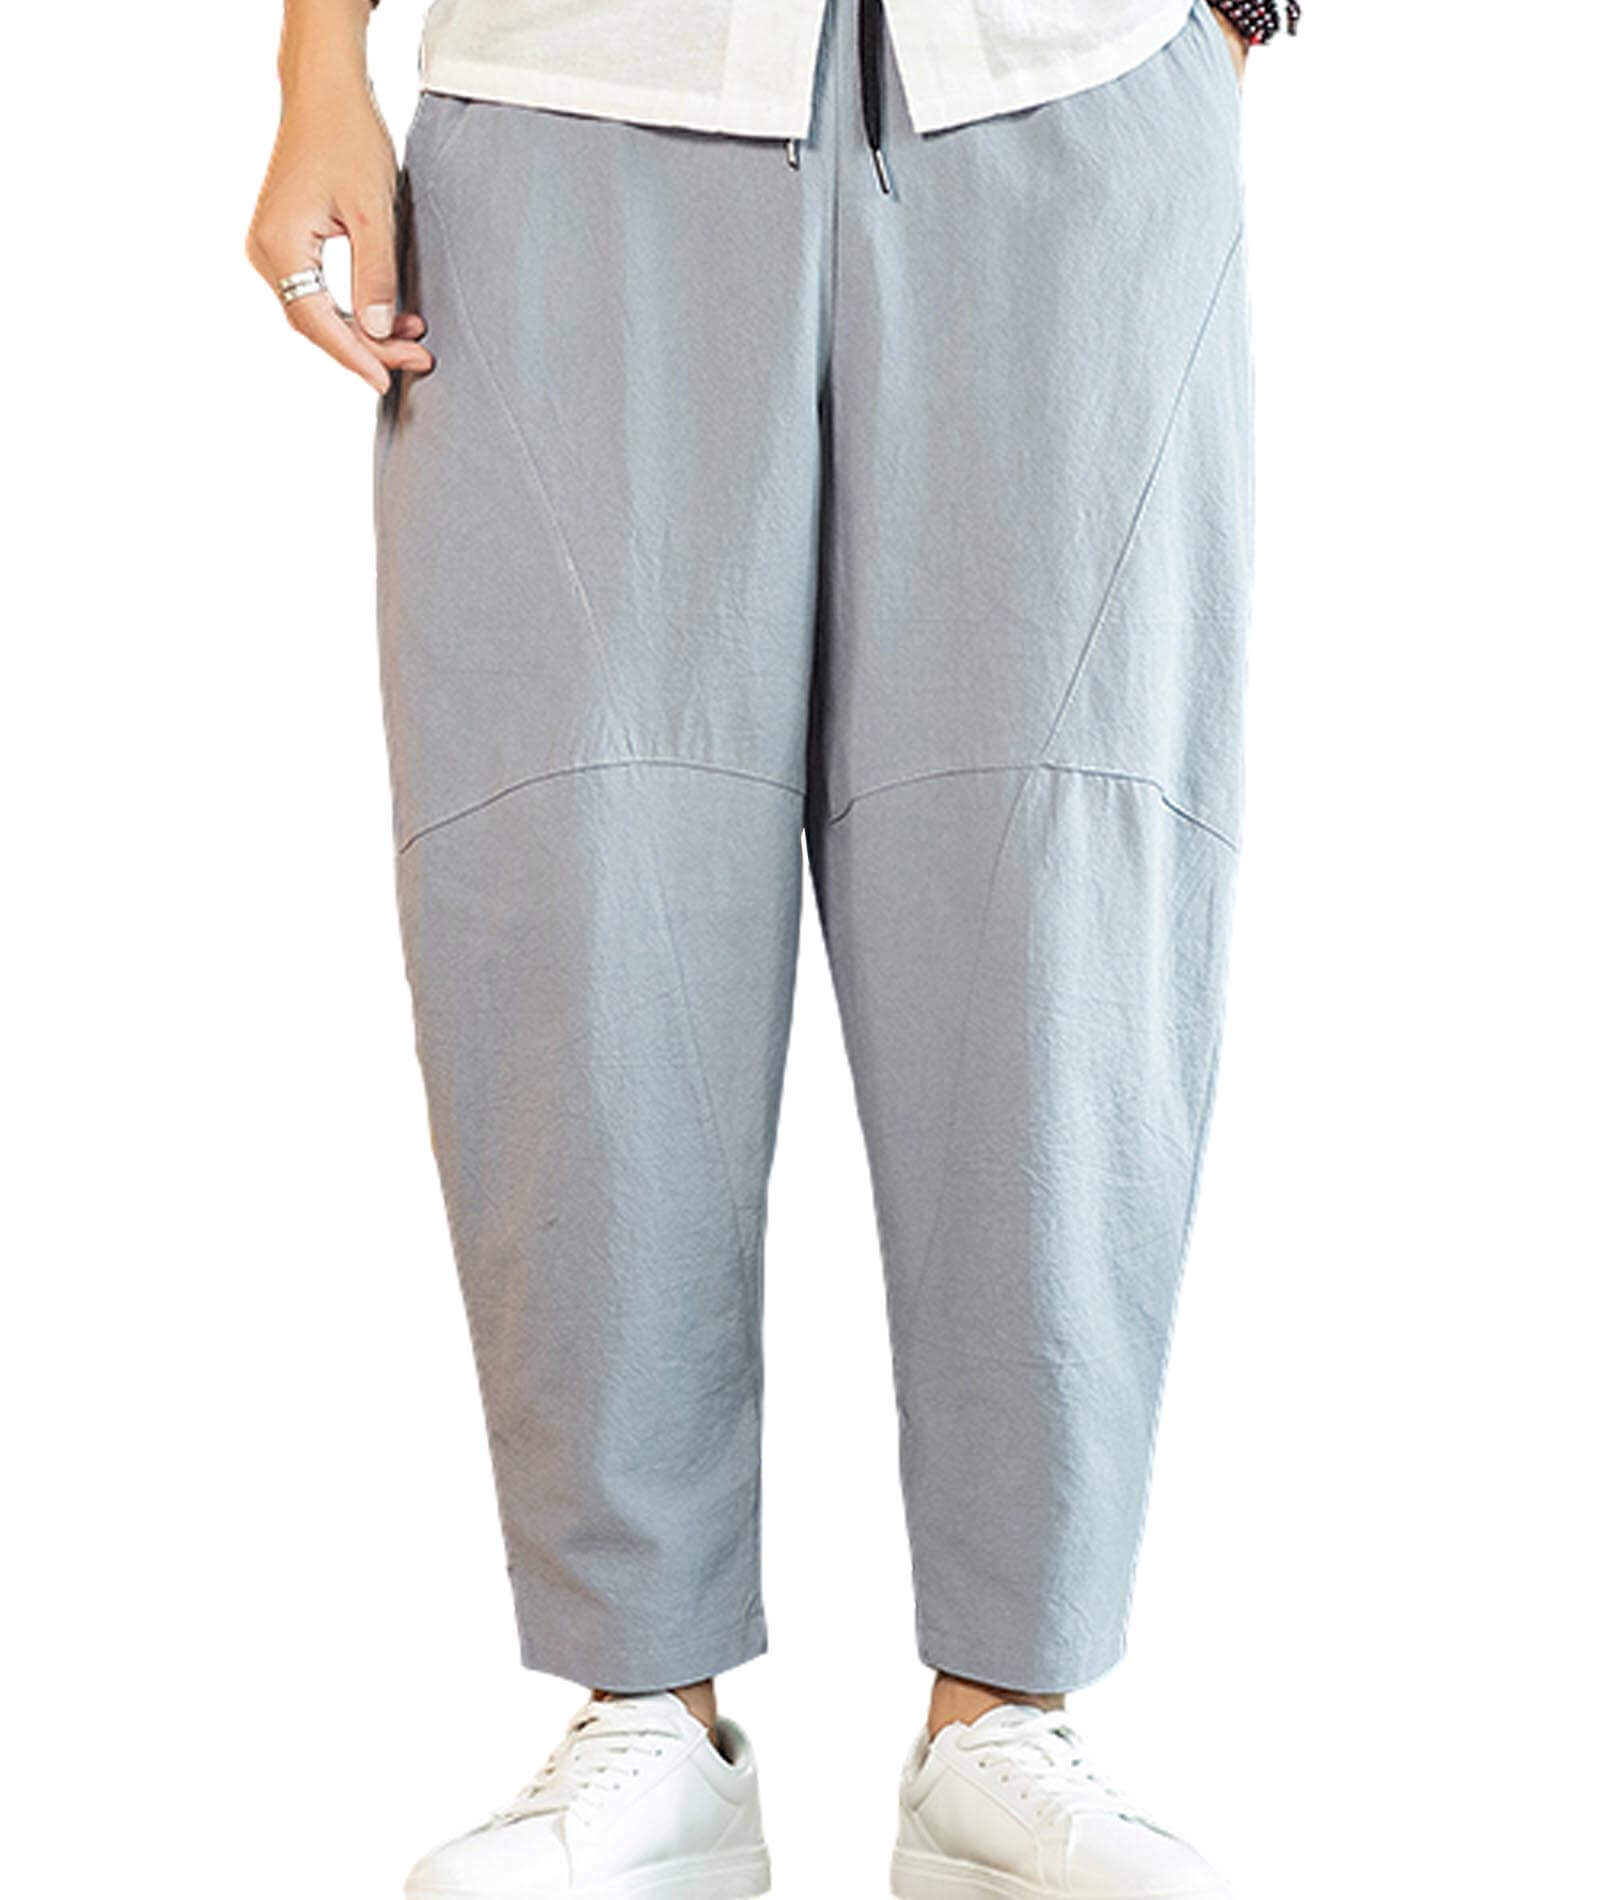  Men's Loose Plus Cotton Linen Summer Breathable Casual Cropped Pants Solid Drawstring Sweatpants Joggers